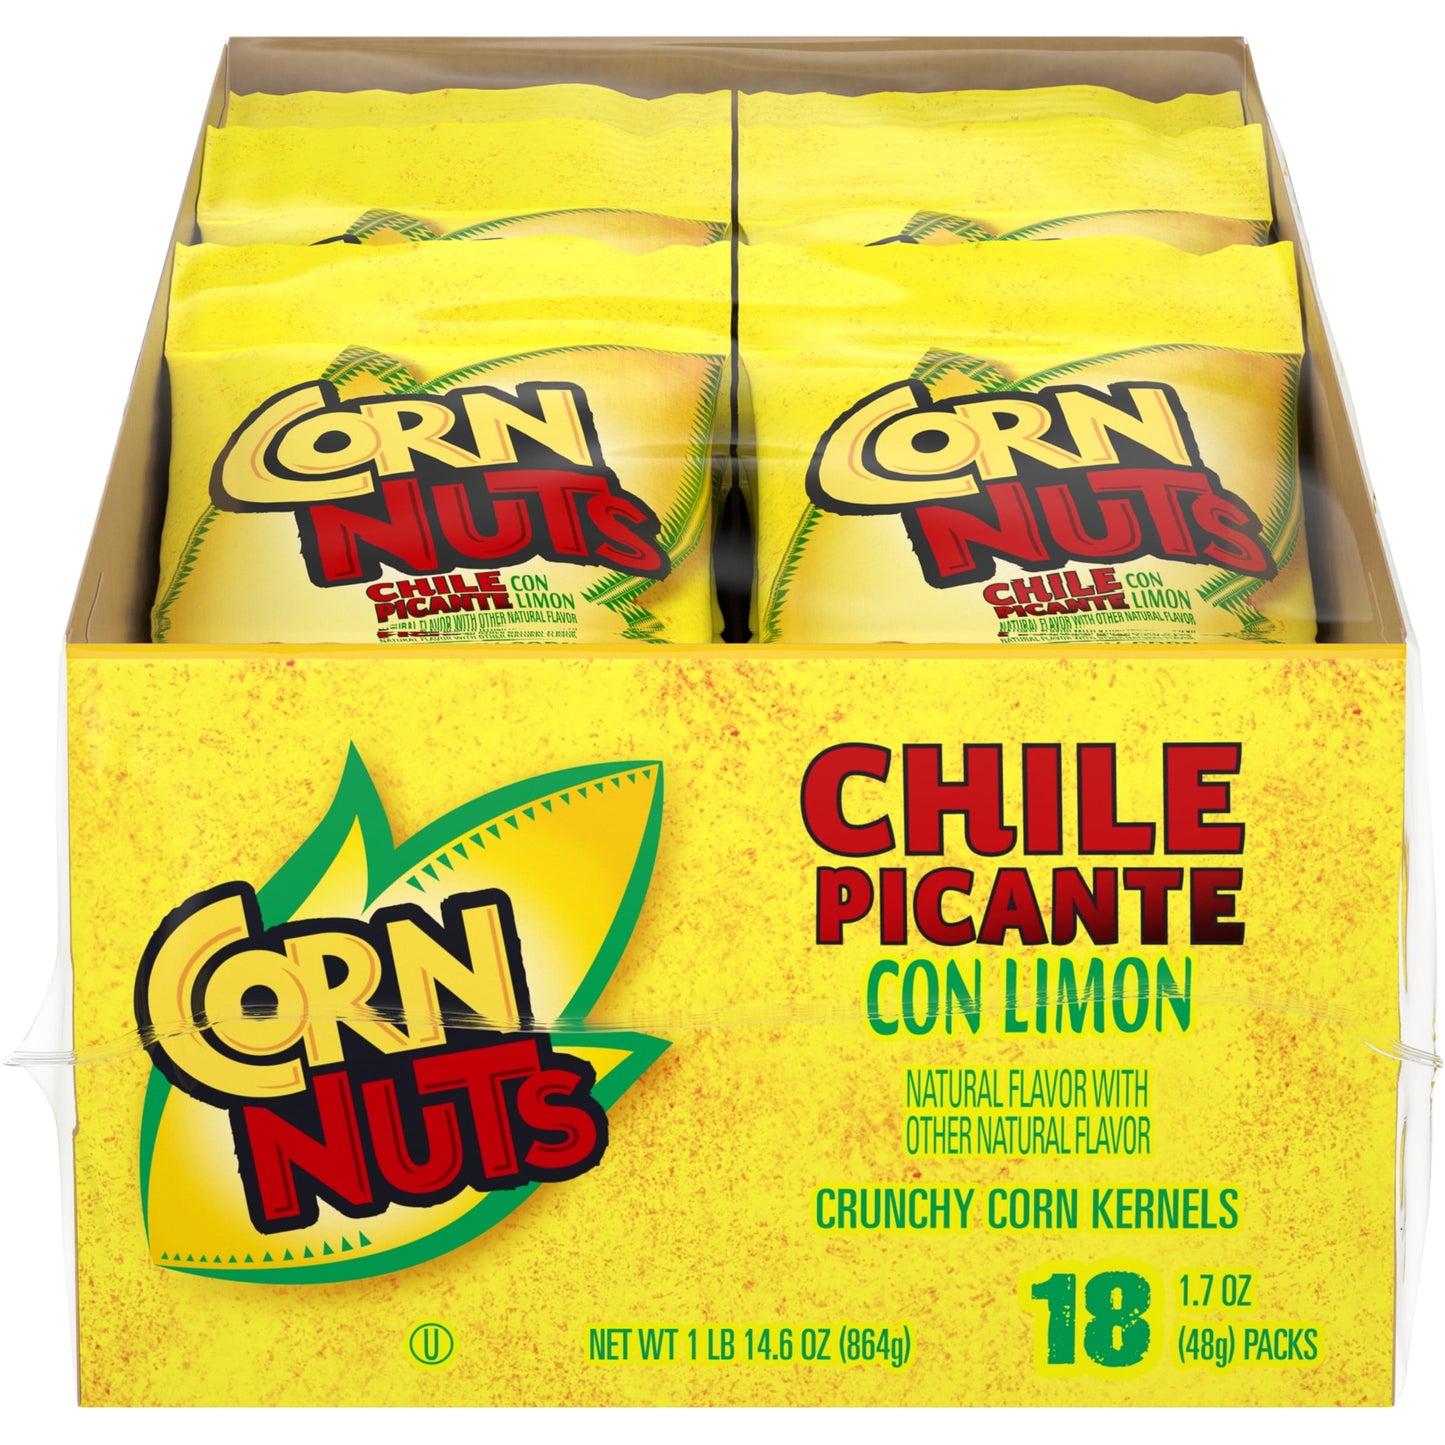 Chile Picante Con Limon Crunchy Corn Kernels Snack, 1.7 Oz Plastic Pouch (Pack of 18)